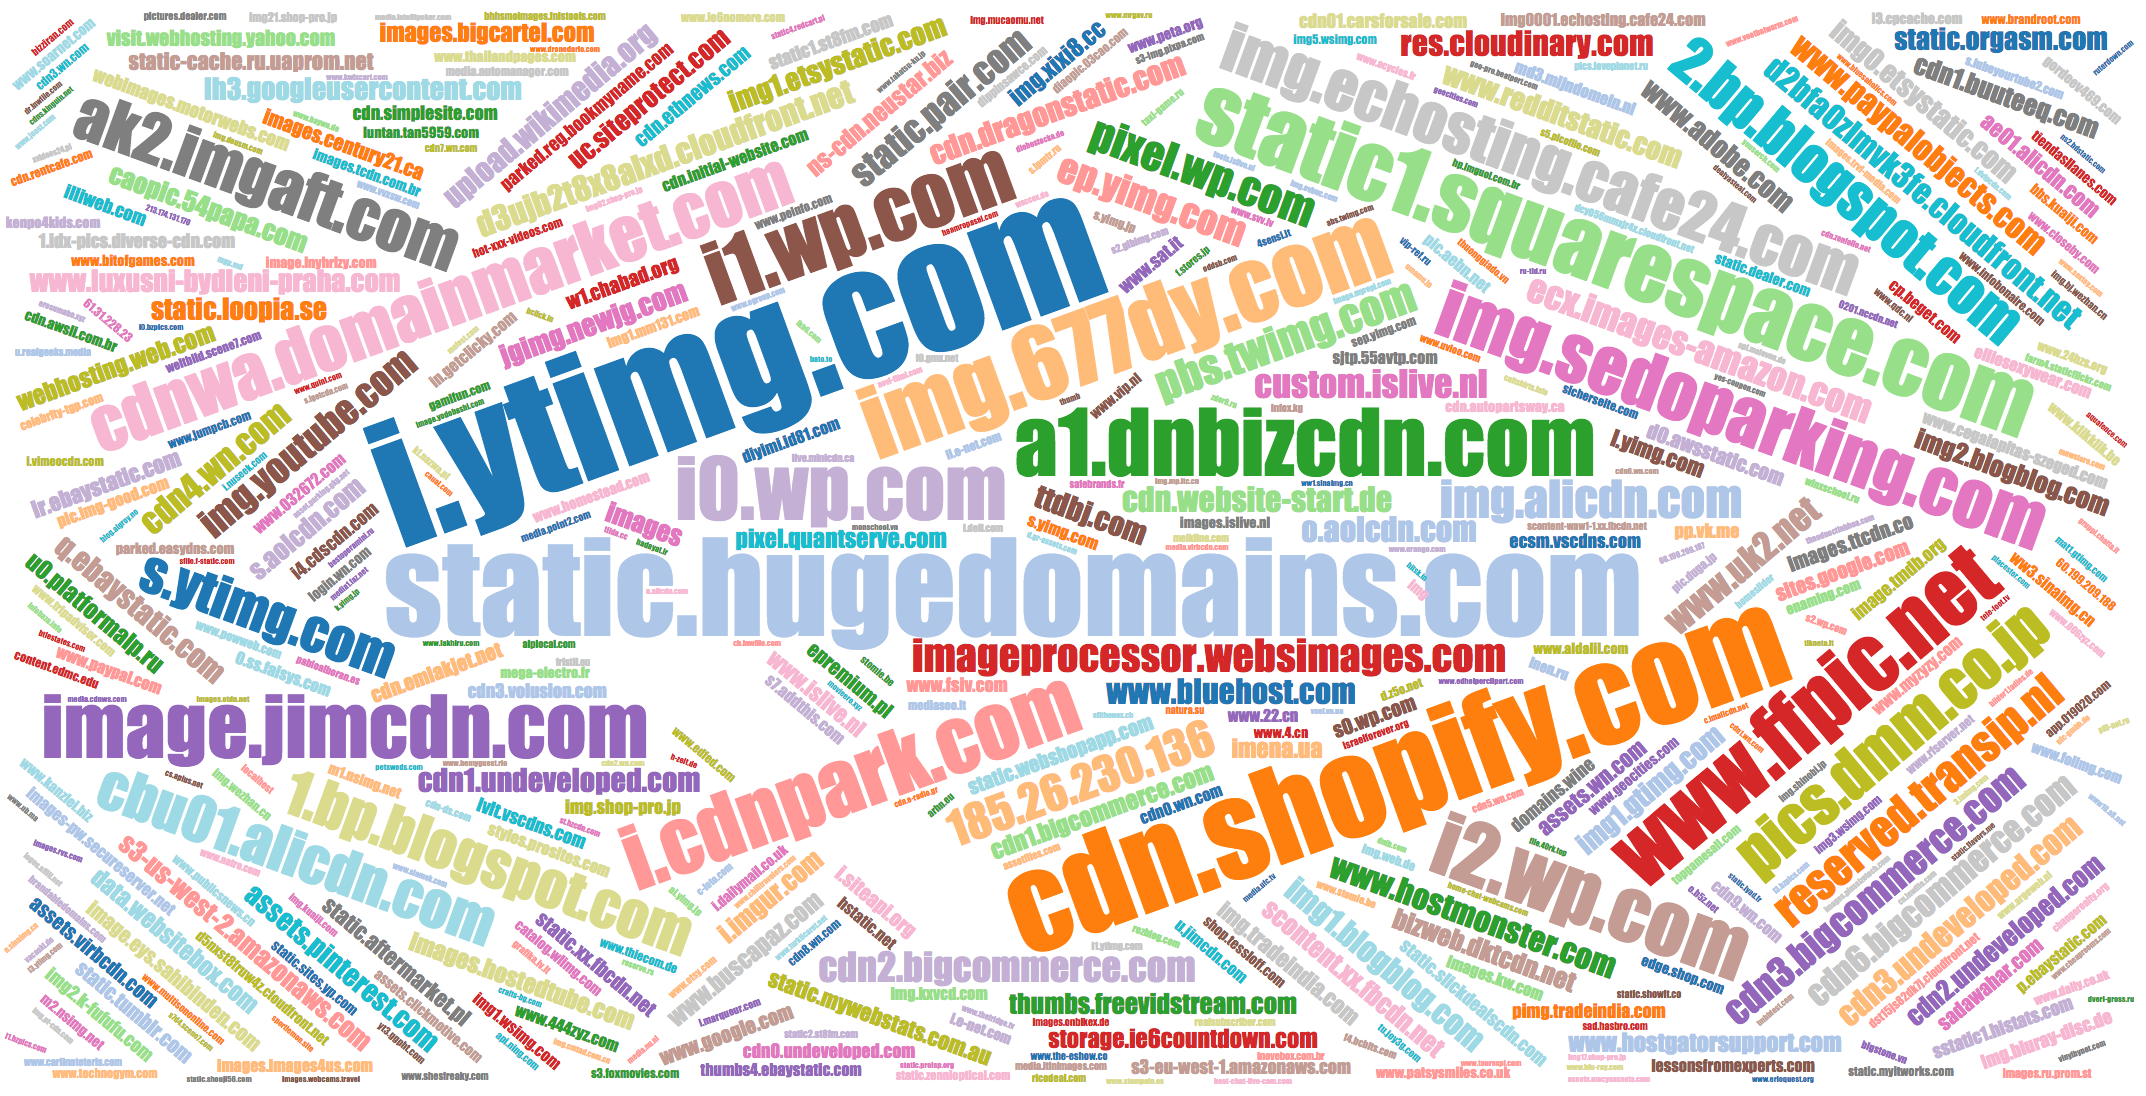 Popular names of IMG domains upload.wikimedia.org, ui.hub.toocle.com, etc.